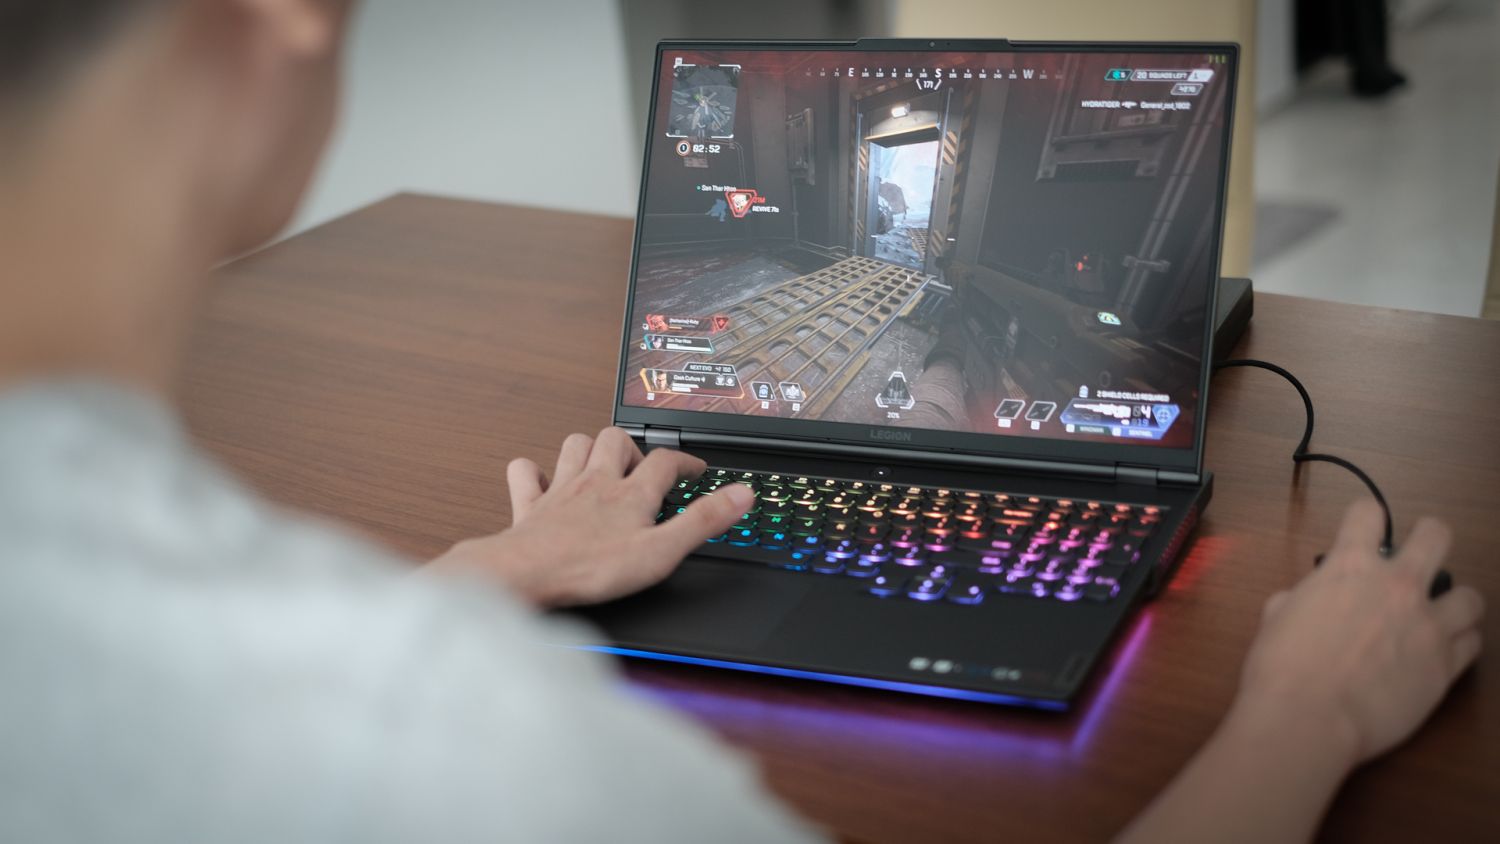 Lenovo Legion 7 Review - Best Ryzen Gaming Laptop of 2021? 